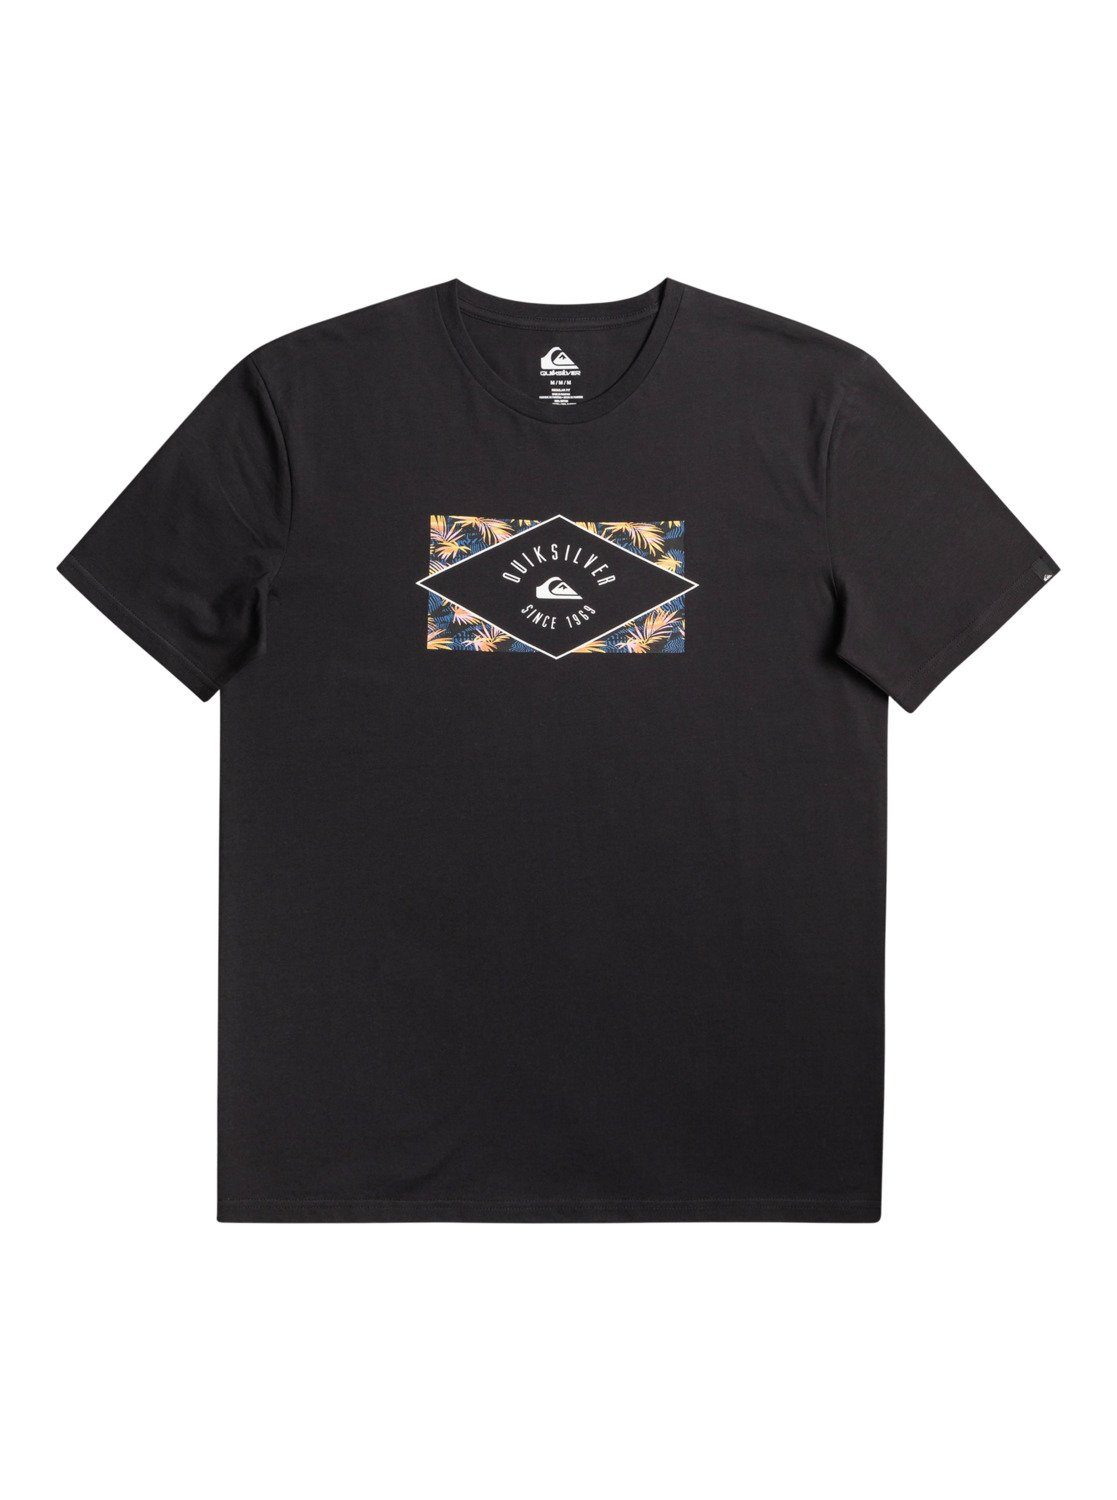 Circled Line Quiksilver Black T-Shirt